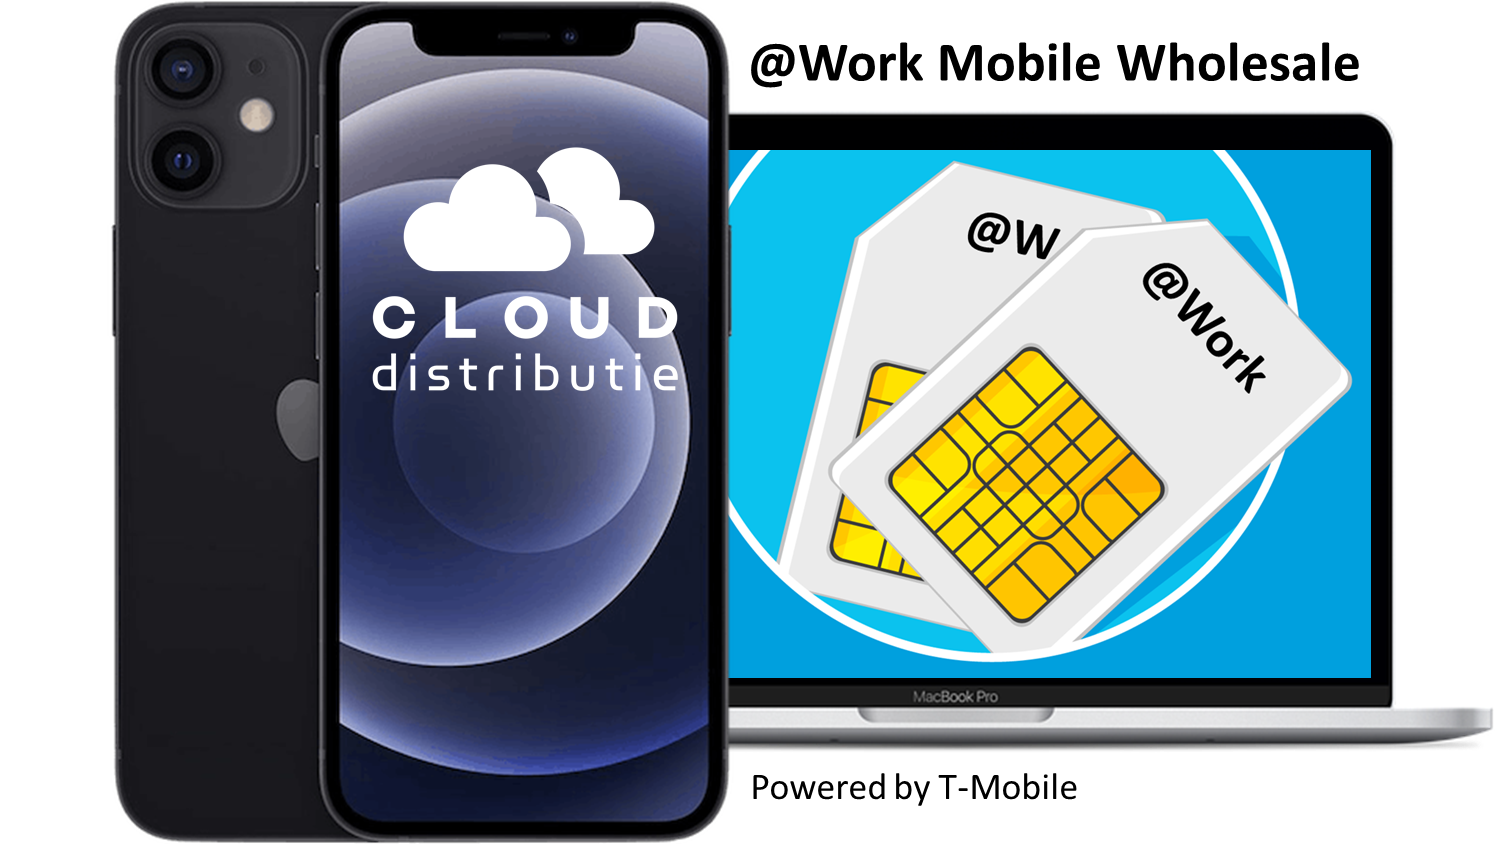 kleinhandel hardop Ru work (Powered by T-Mobile) abonnementen lopende actie - wholesale  leverancier van Cloud telefonie internet mobiel en VoIP